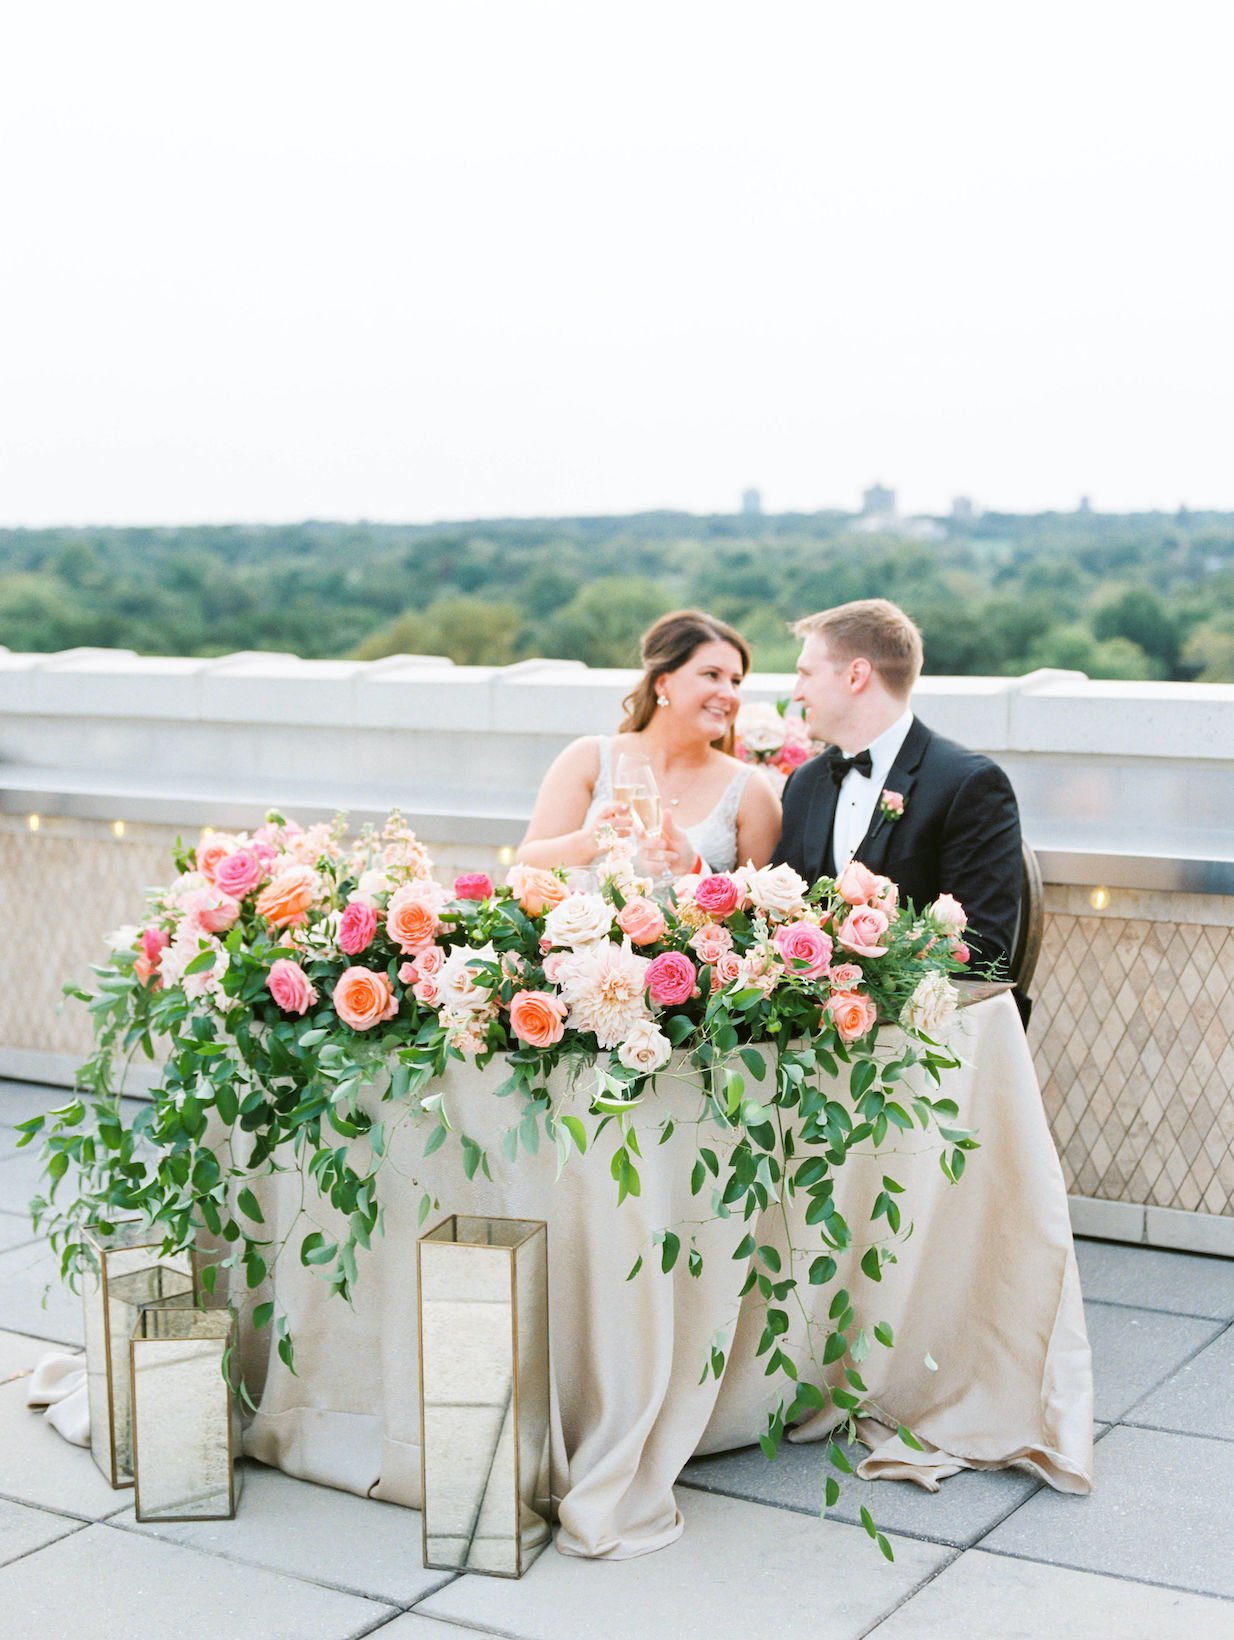 Belli-Fiori-St-Louis-Wedding-Florist-Sweetheart-Table-Flowers-Laura Ann-Miller-Photography-799.jpg